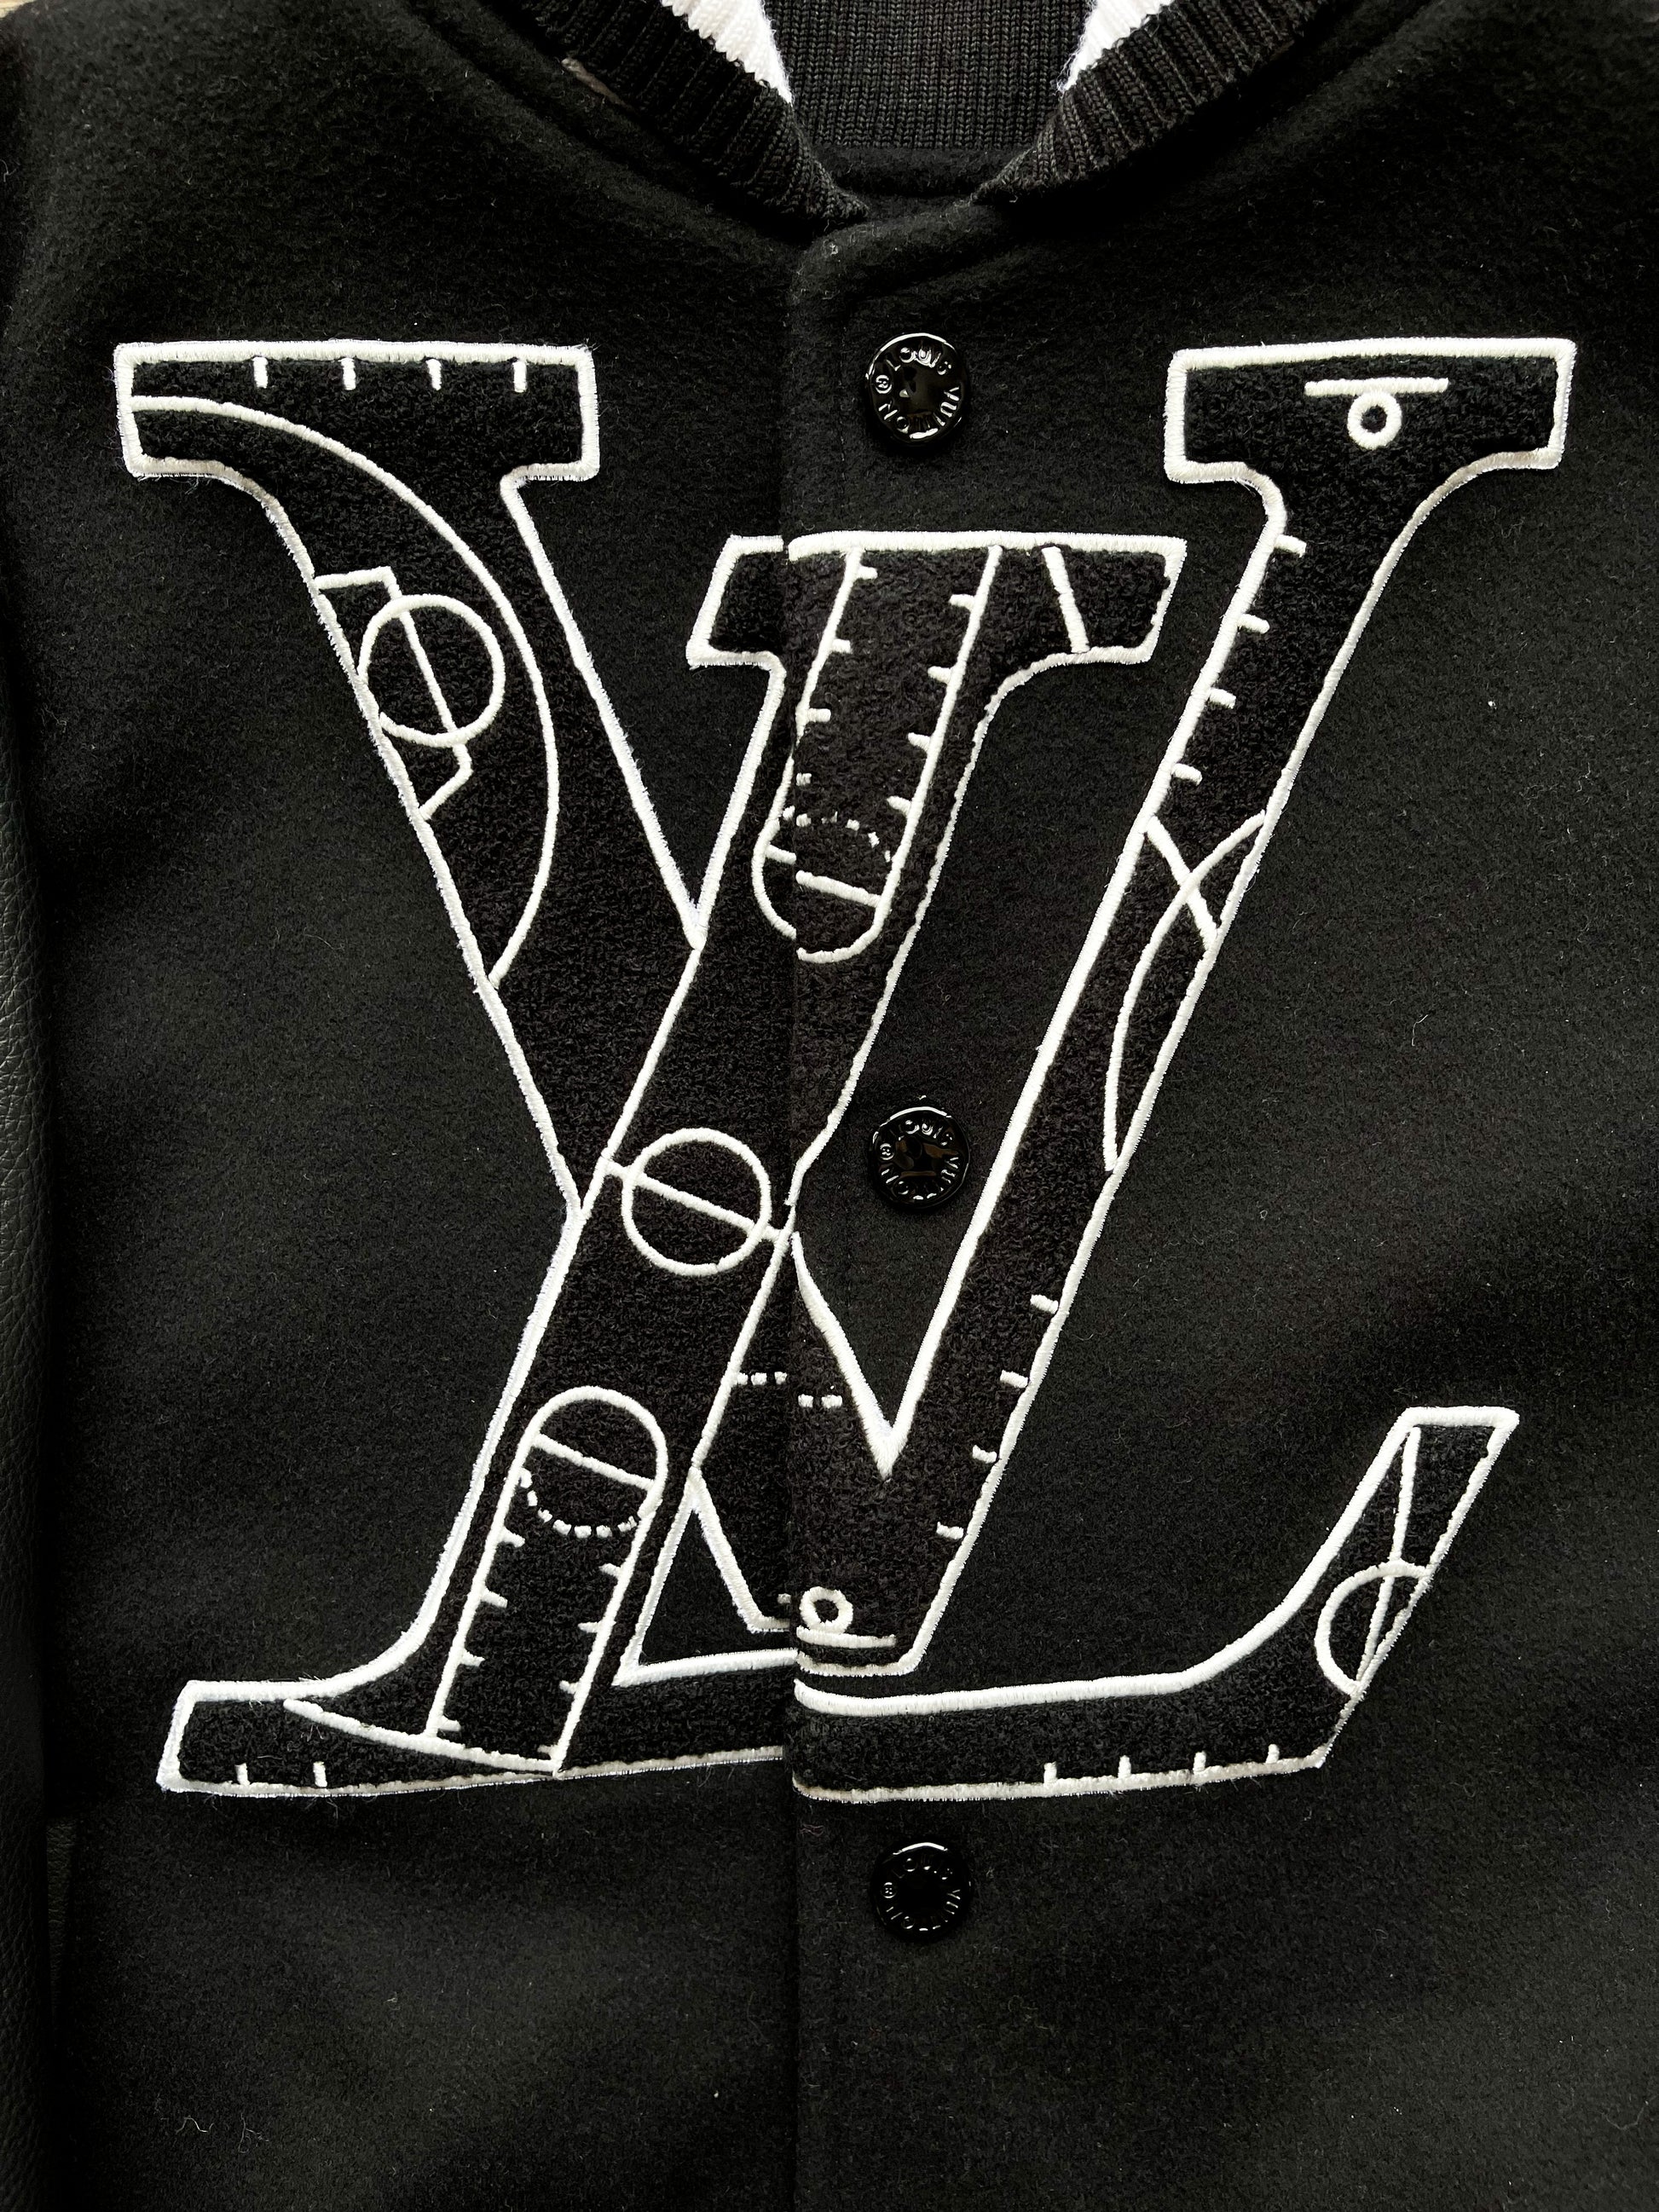 LOUIS VUITTON X NBA Graphic Print Varsity Jacket Sz 50 AW 22